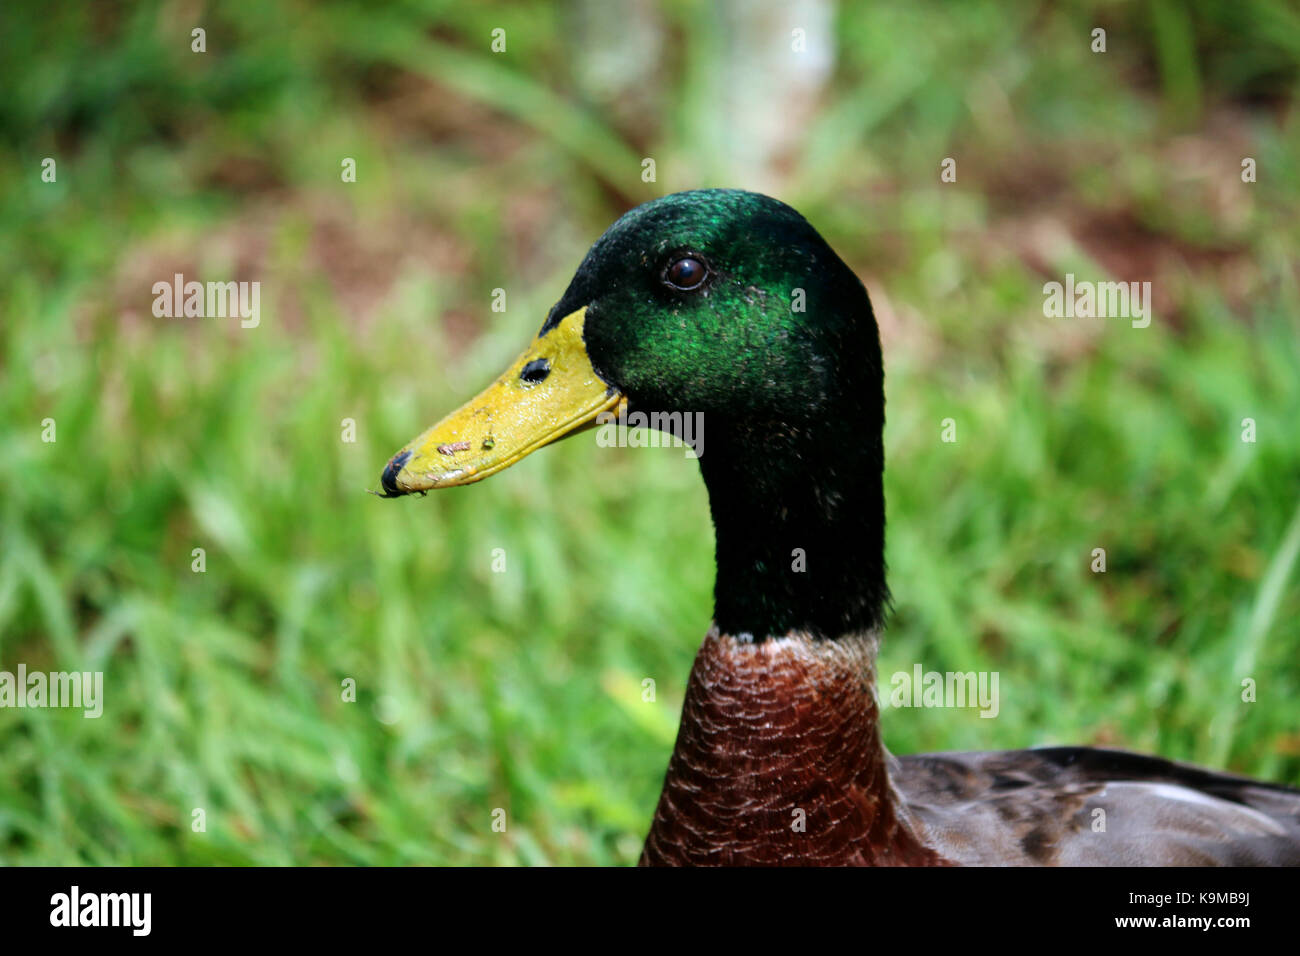 A close up head shot of a male mallard duck in the grass. Stock Photo